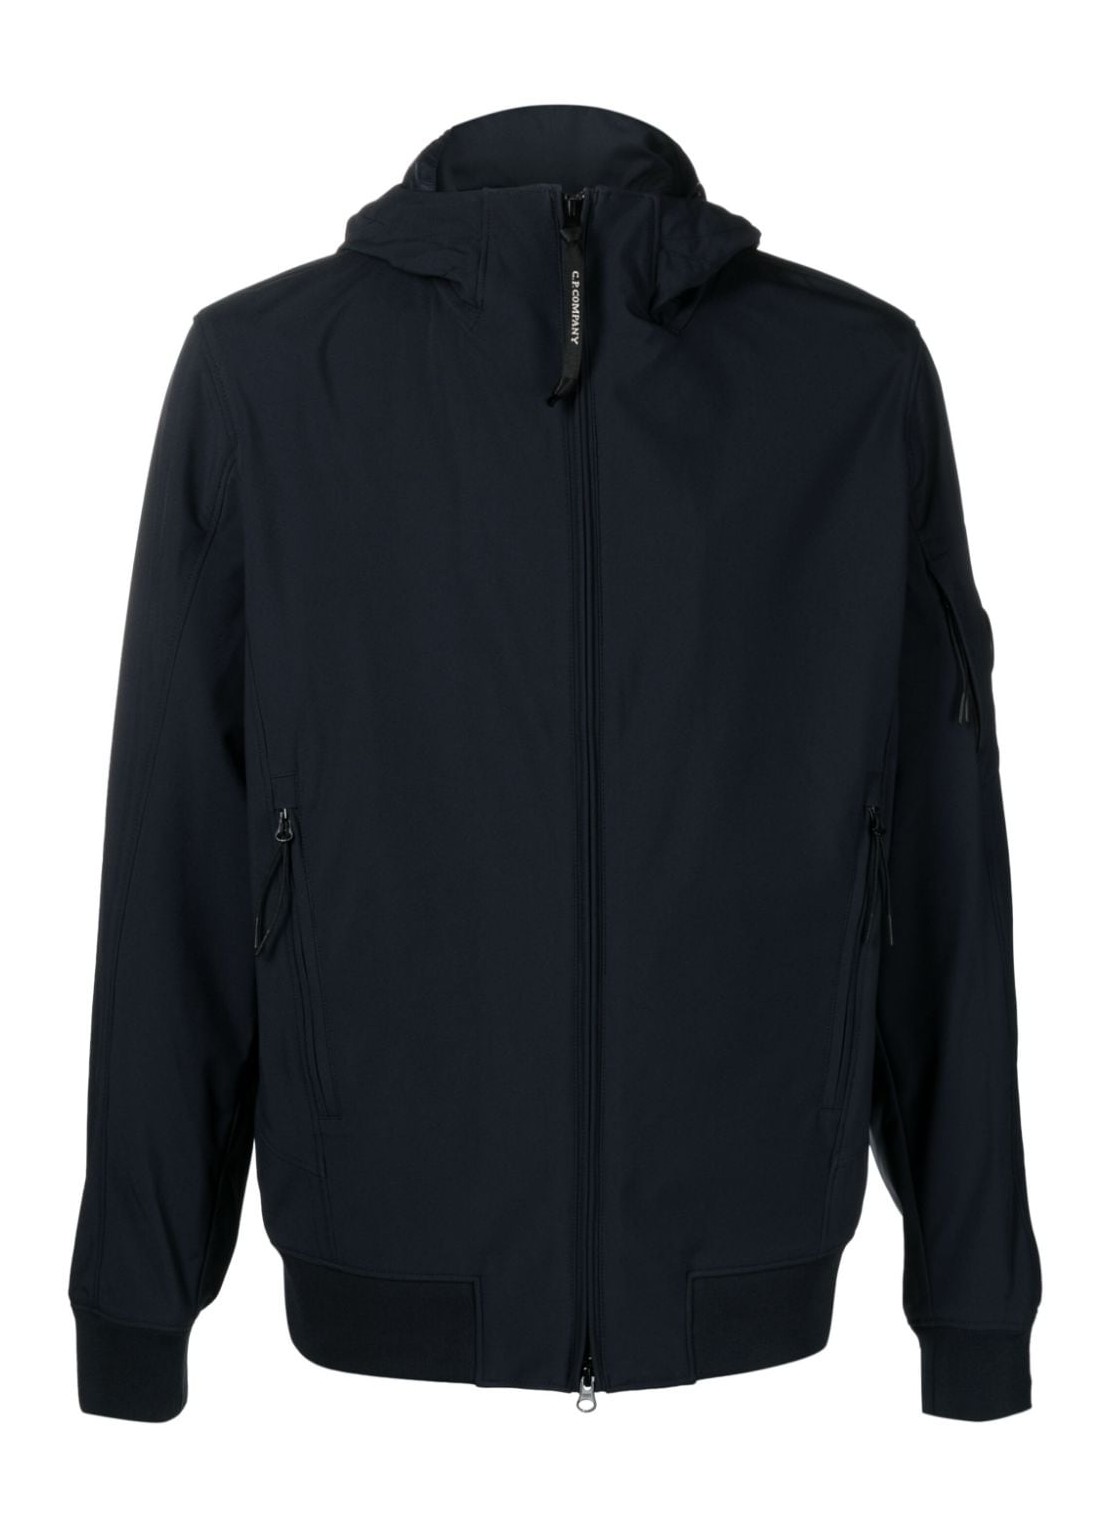 Outerwear c.p.company outerwear man c.p. shell-r jacket 16cmow003a005968a 888 talla Azul
 